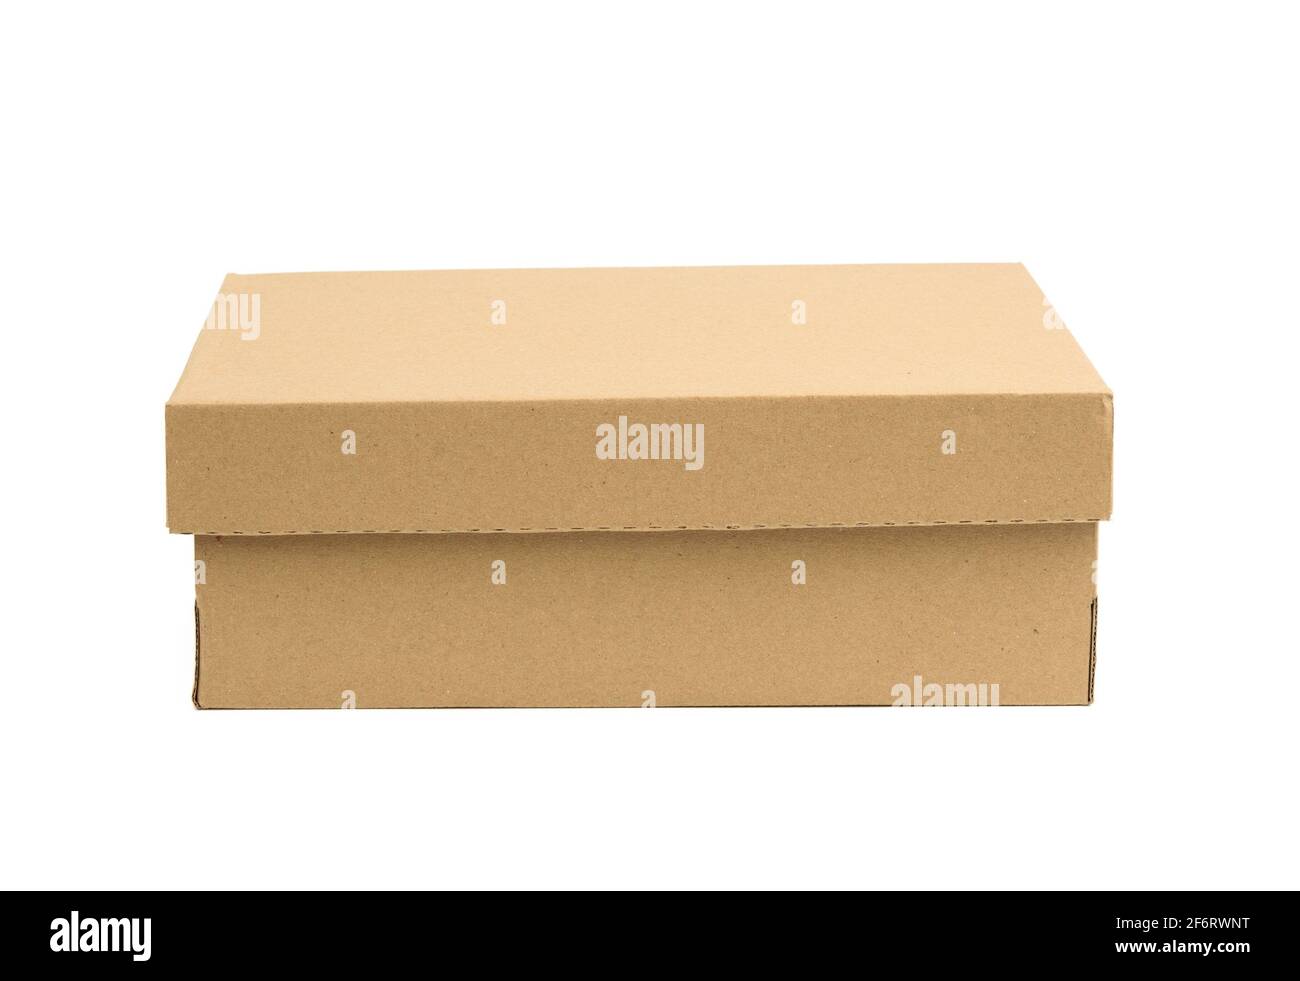 caja rectangular de cartón cerrado hecha de papel corrugado marrón aislado  sobre fondo blanco Fotografía de stock - Alamy